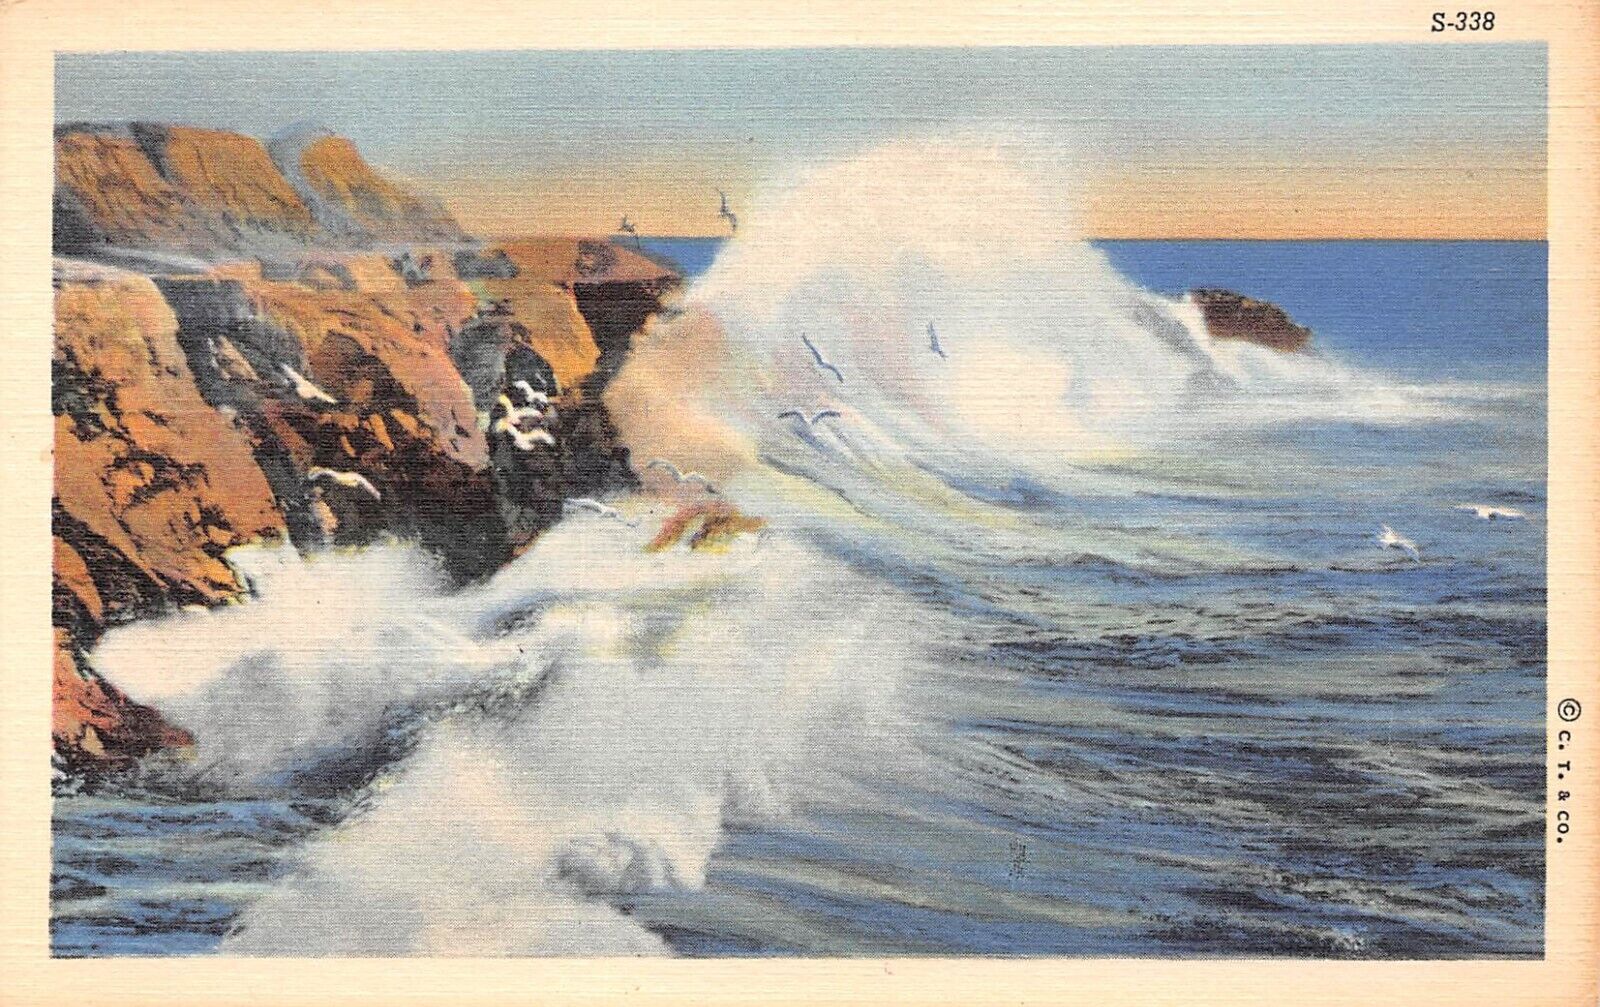 D2111 Waves & Gulls, 1 of 10 C. T. Water Scenes S-338, 1938 Teich Linen Postcard